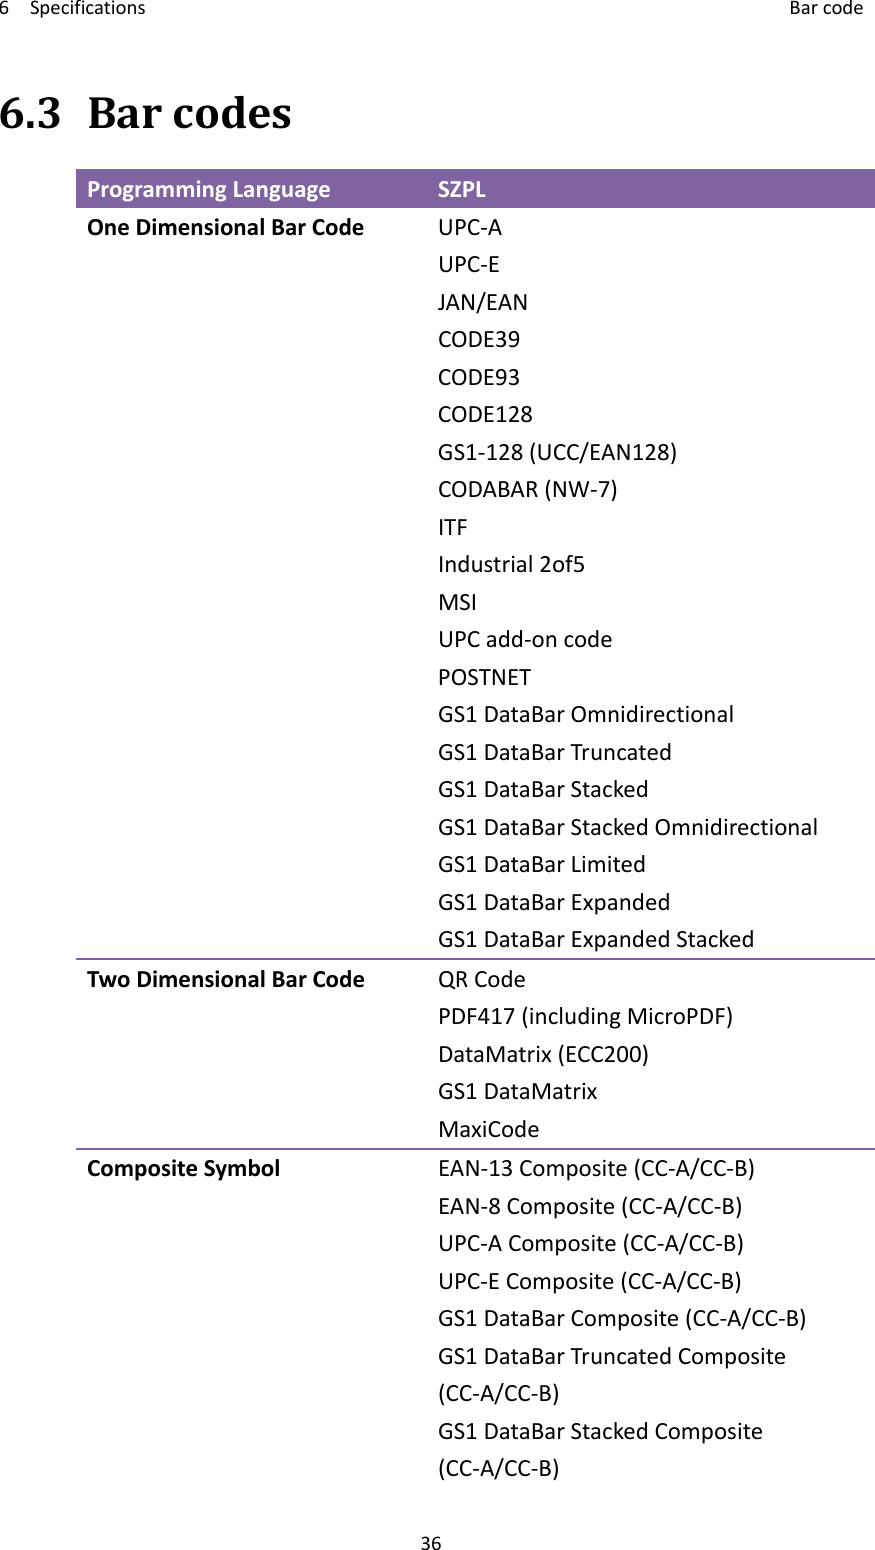 6Specifications Barcode366.3 BarcodesProgrammingLanguageSZPLOneDimensionalBarCodeUPC‐AUPC‐EJAN/EANCODE39CODE93CODE128GS1‐128(UCC/EAN128)CODABAR(NW‐7)ITFIndustrial2of5MSIUPCadd‐oncodePOSTNETGS1DataBarOmnidirectionalGS1DataBarTruncatedGS1DataBarStackedGS1DataBarStackedOmnidirectionalGS1DataBarLimitedGS1DataBarExpandedGS1DataBarExpandedStackedTwoDimensionalBarCodeQRCodePDF417(includingMicroPDF)DataMatrix(ECC200)GS1DataMatrixMaxiCodeCompositeSymbolEAN‐13Composite(CC‐A/CC‐B)EAN‐8Composite(CC‐A/CC‐B)UPC‐AComposite(CC‐A/CC‐B)UPC‐EComposite(CC‐A/CC‐B)GS1DataBarComposite(CC‐A/CC‐B)GS1DataBarTruncatedComposite(CC‐A/CC‐B)GS1DataBarStackedComposite(CC‐A/CC‐B)